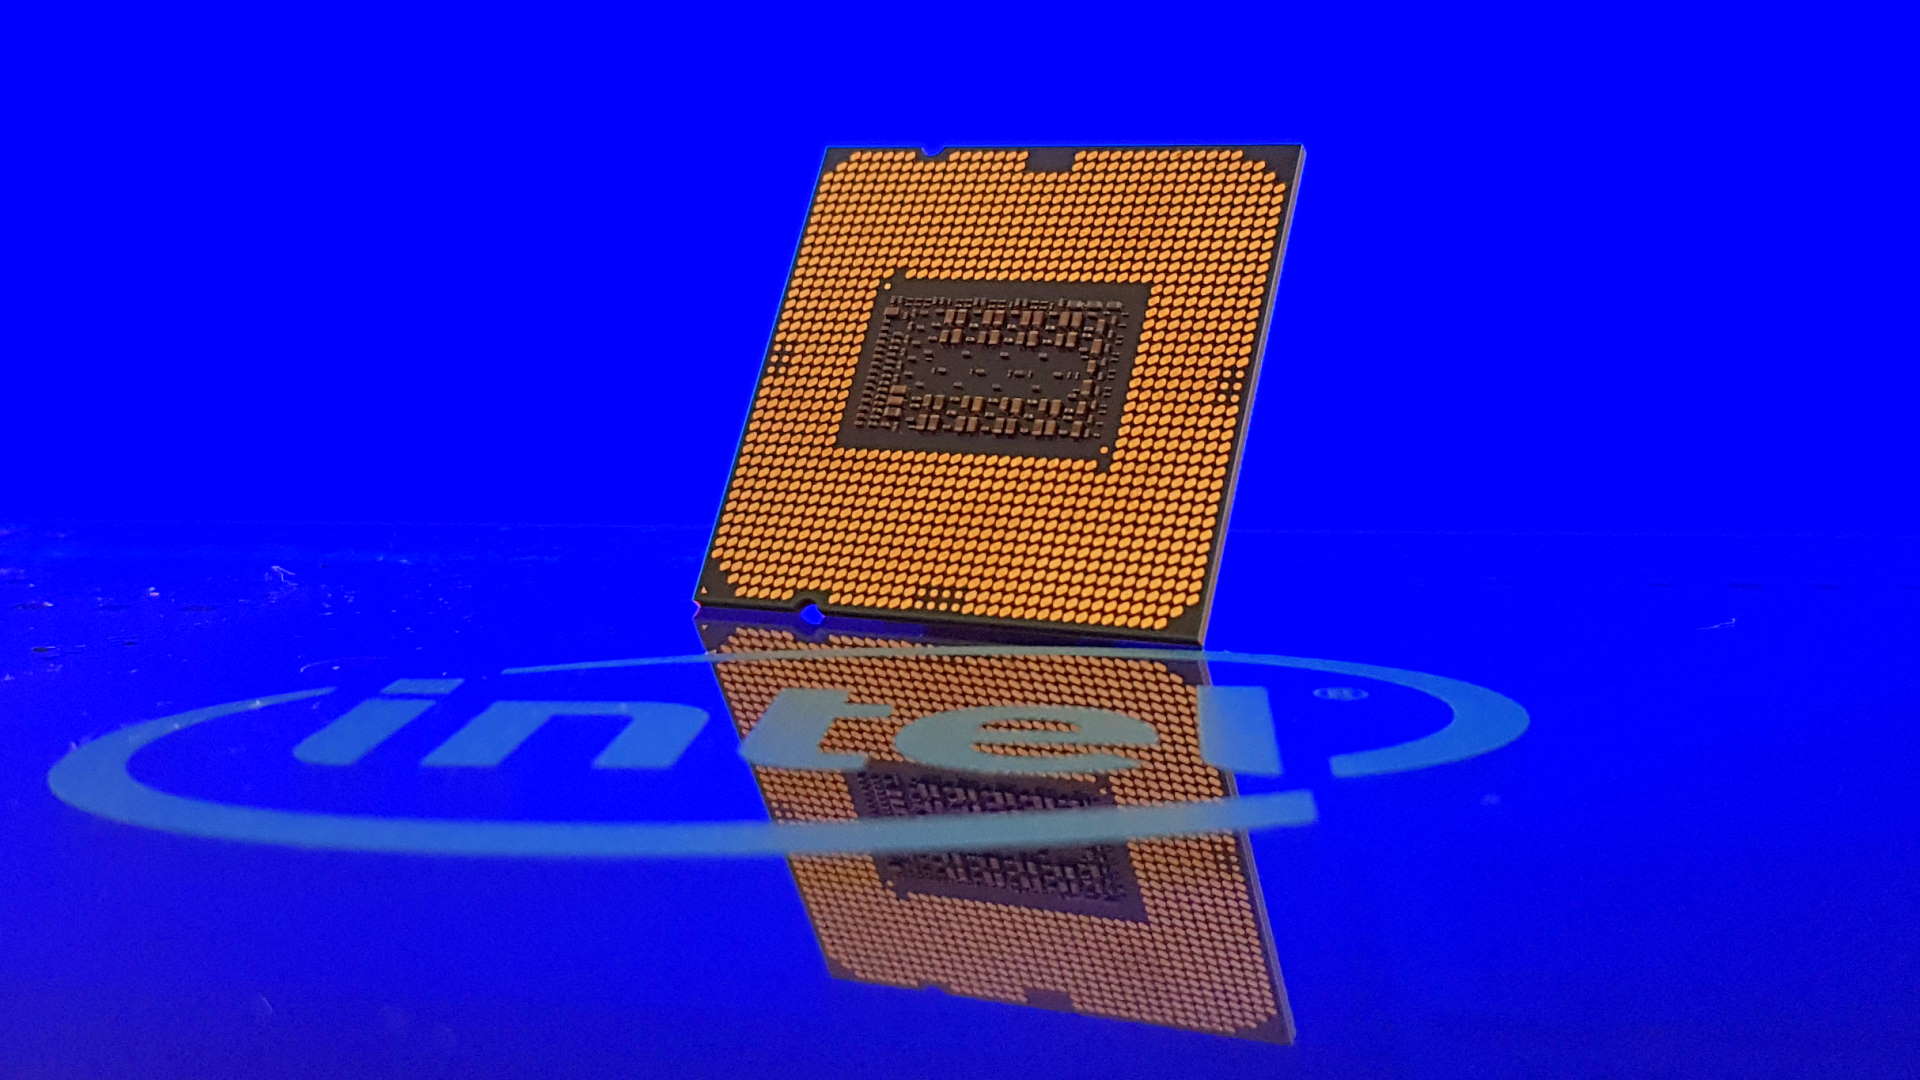 Hardware vulnerability in Intel processors